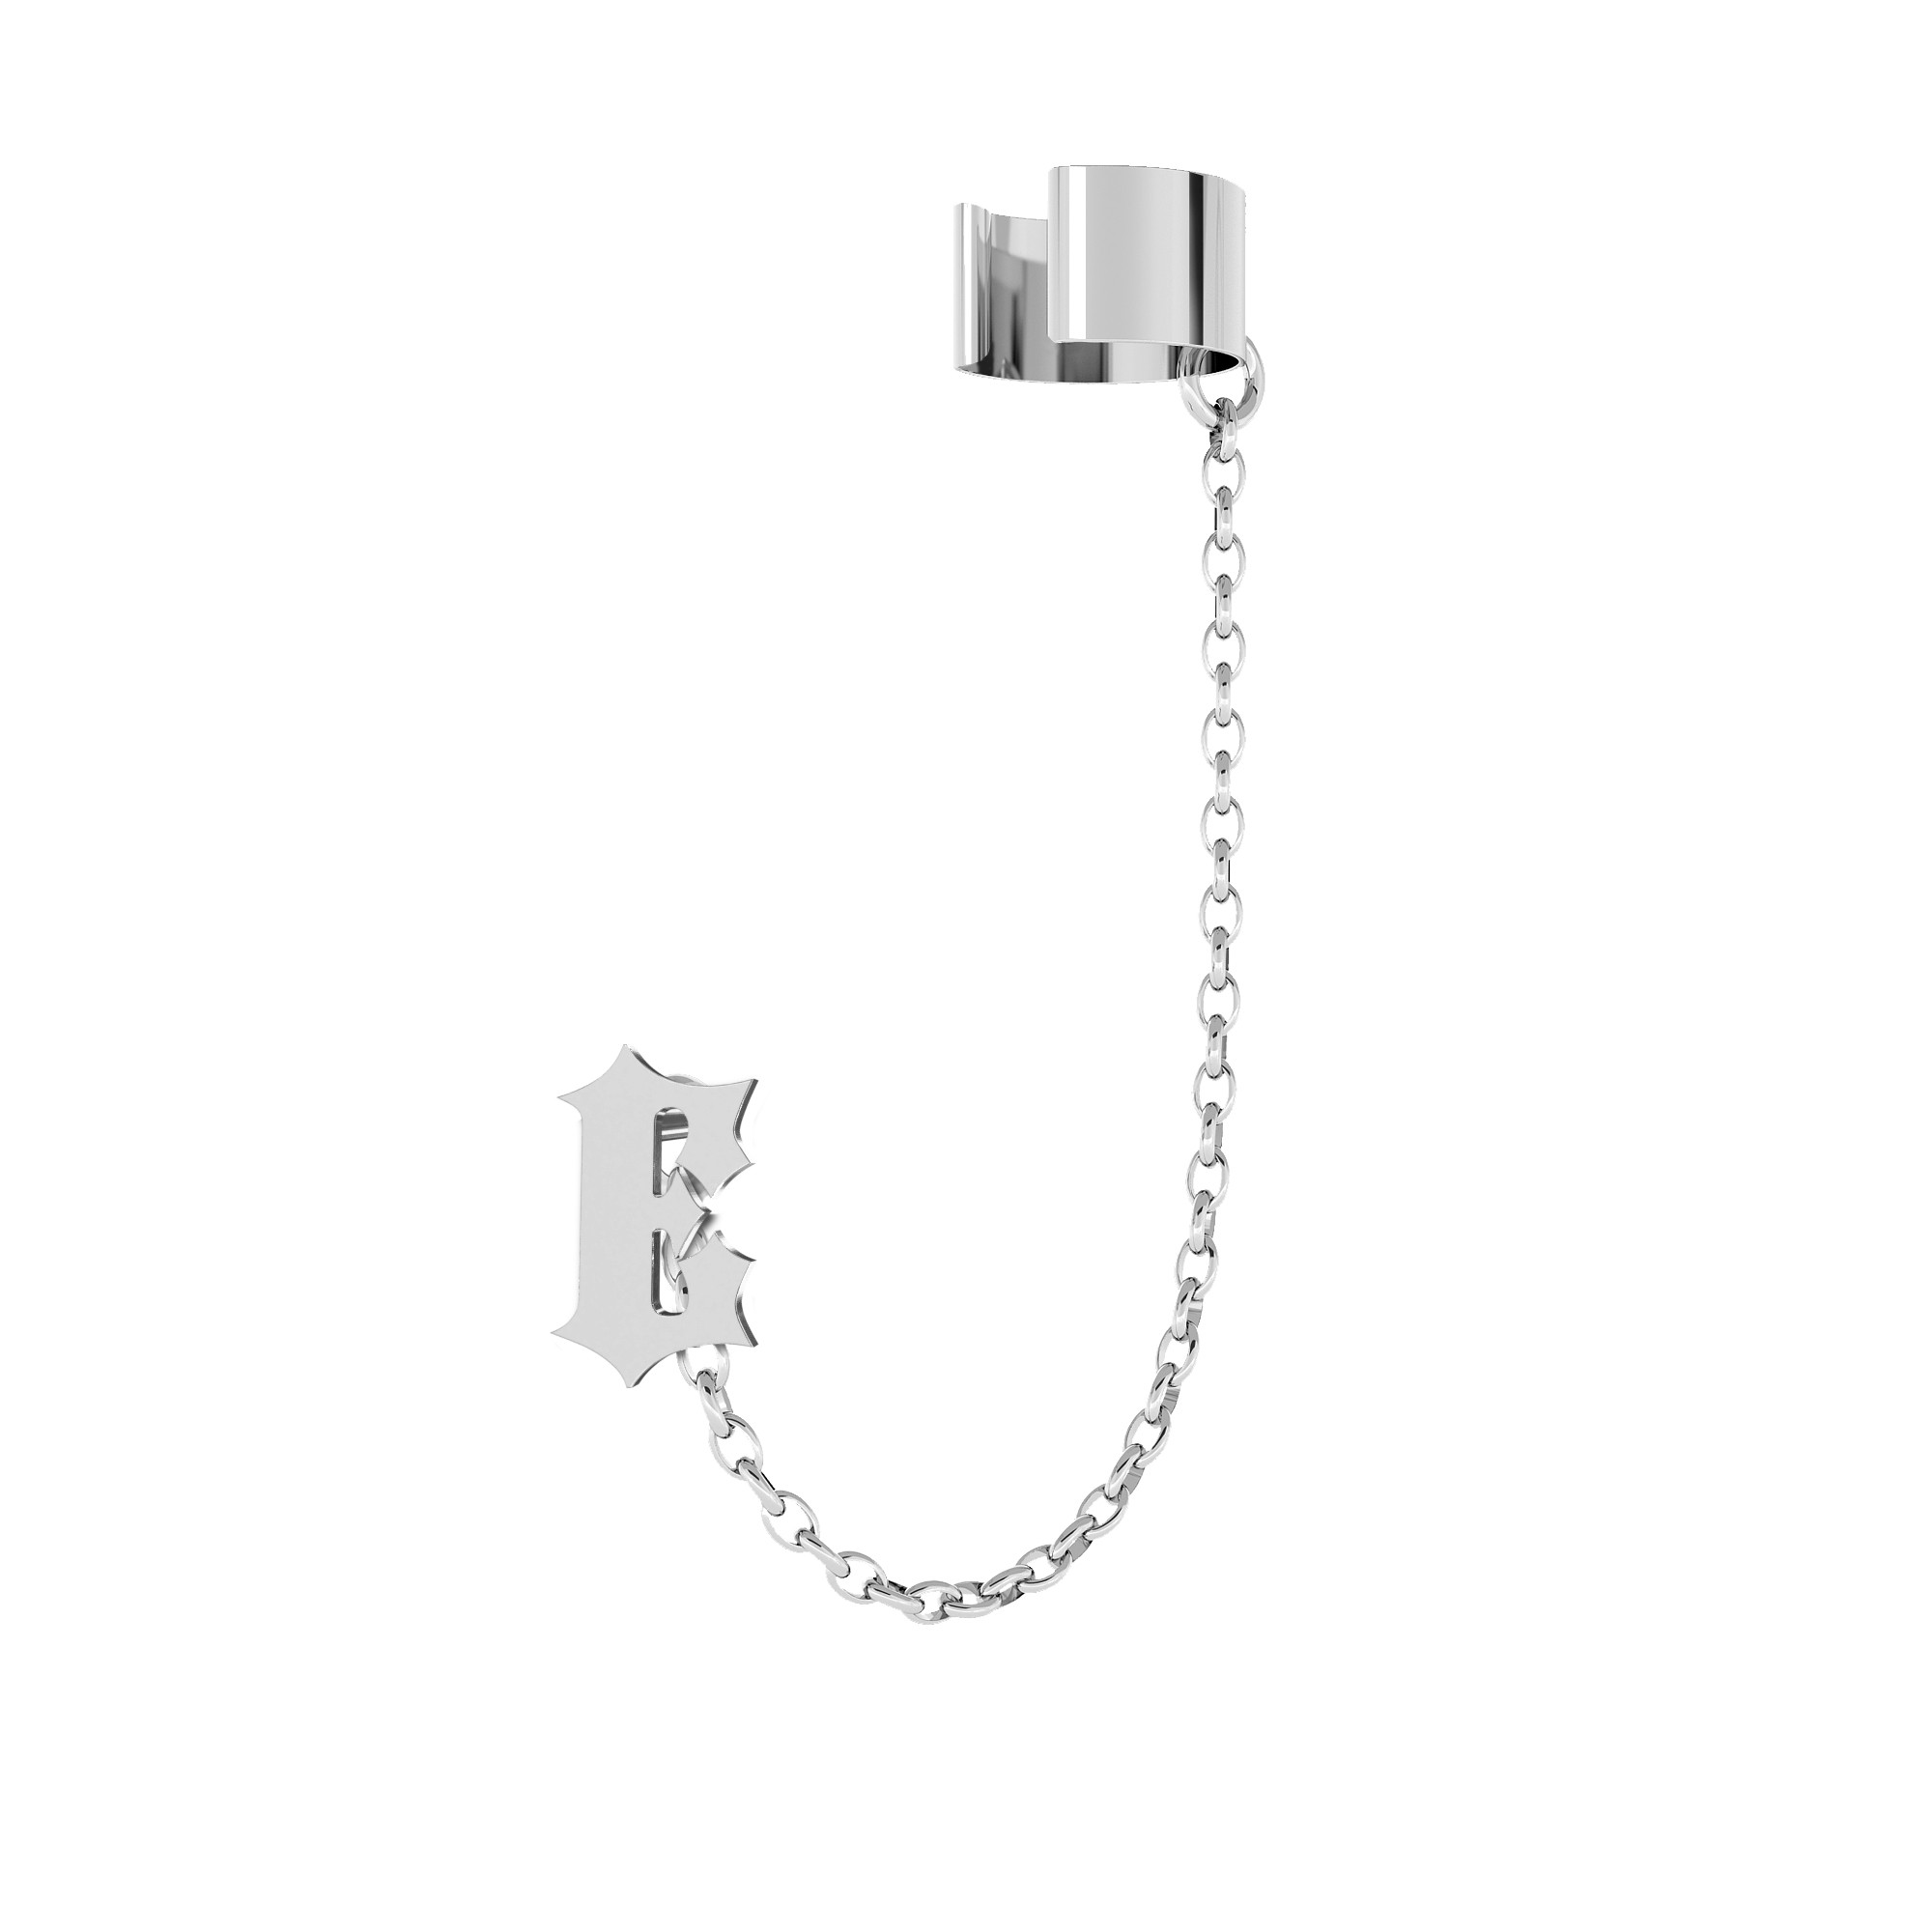 Chain earrings cone sterling silver 925